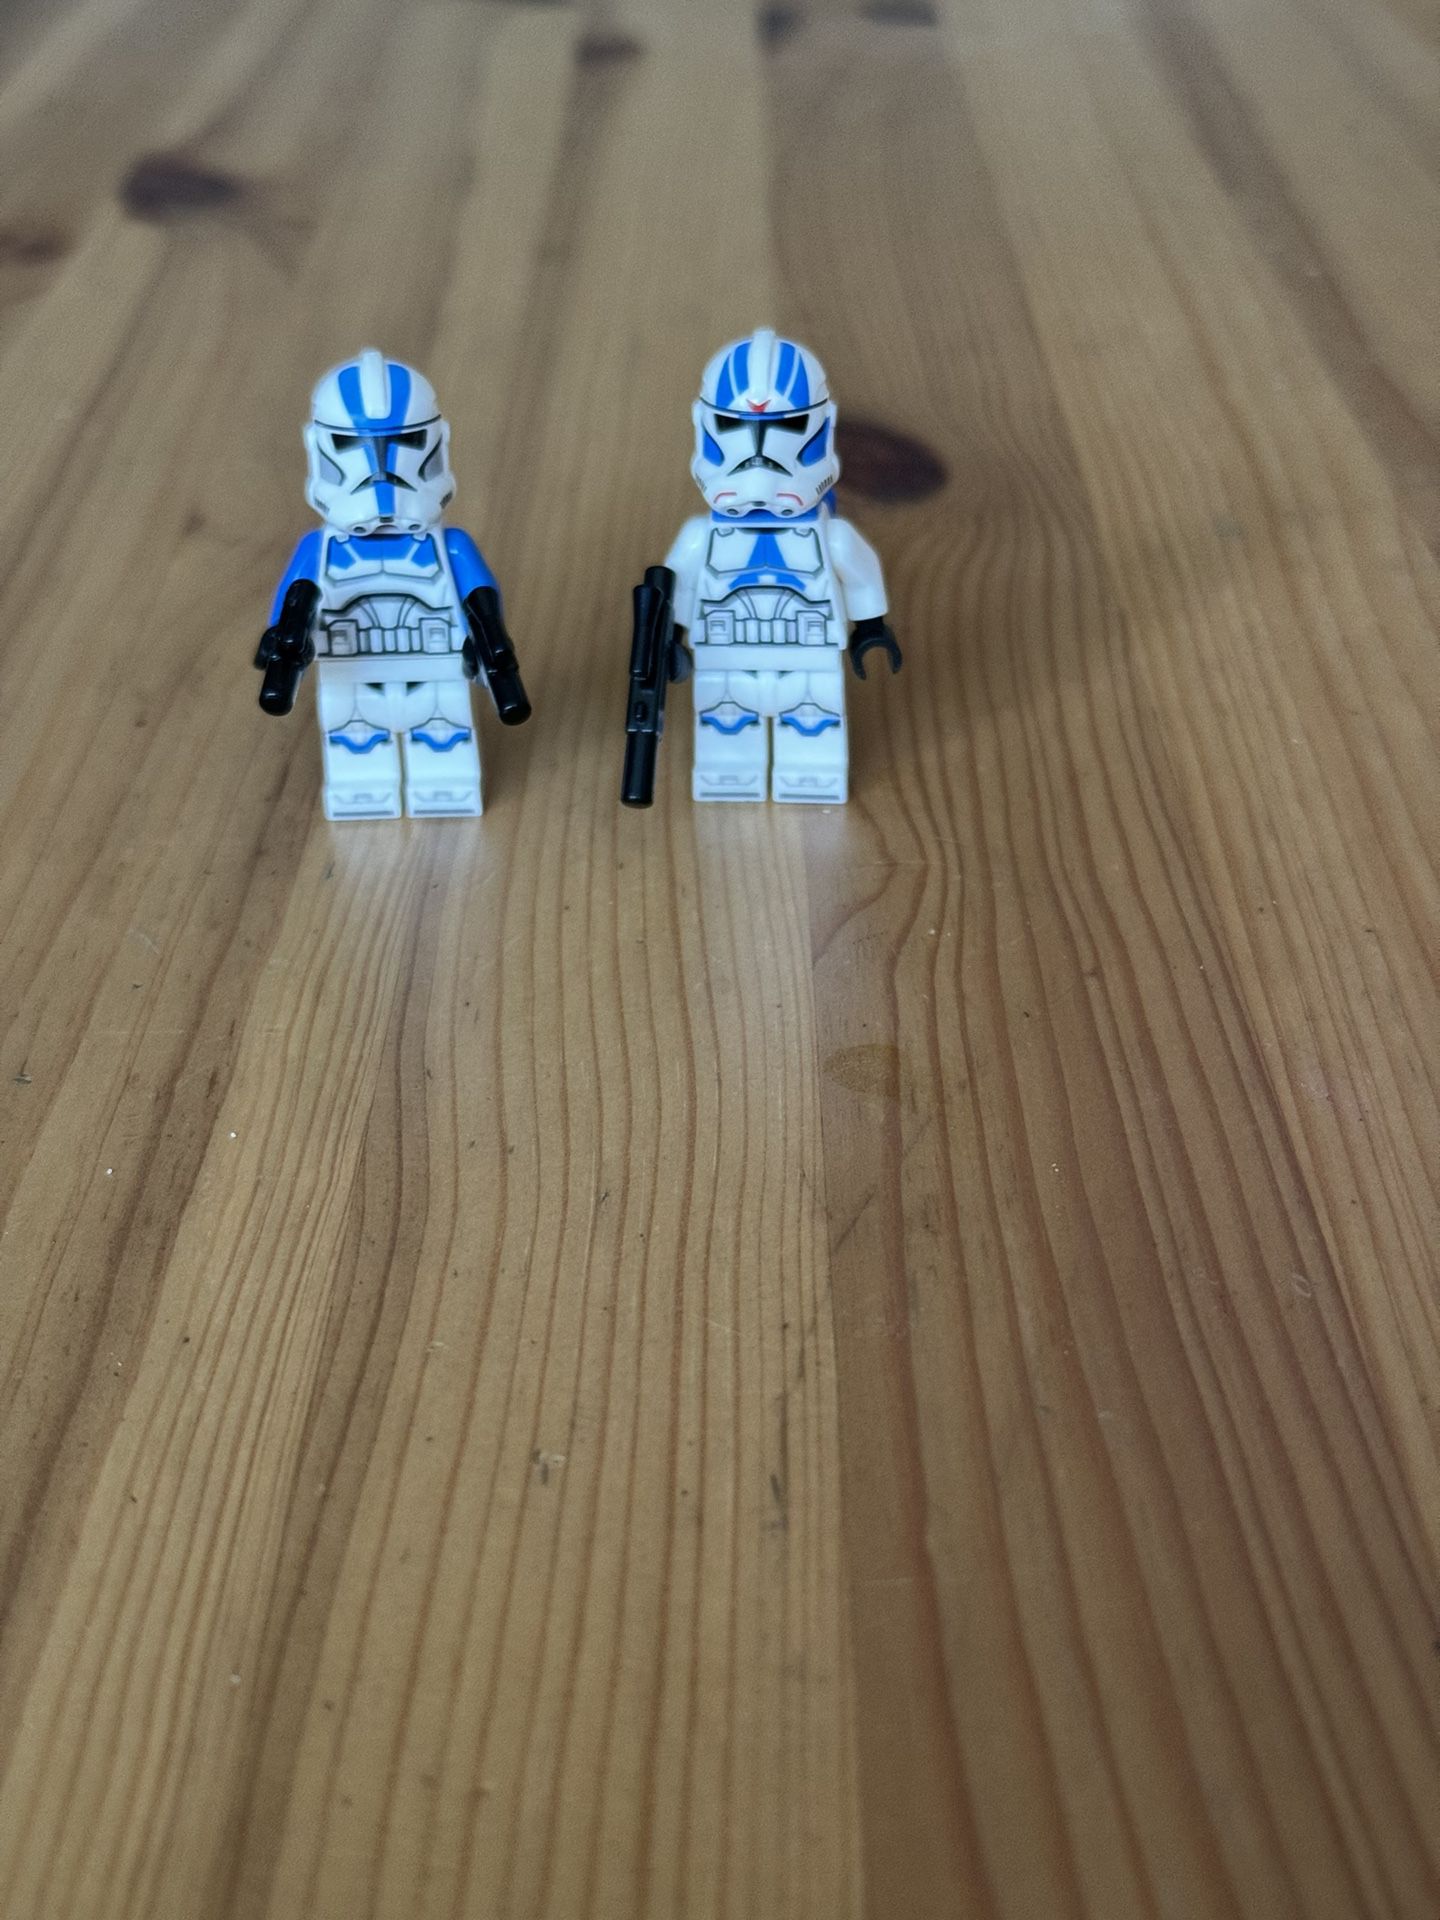 2 Lego 501st clone wars mini Figures